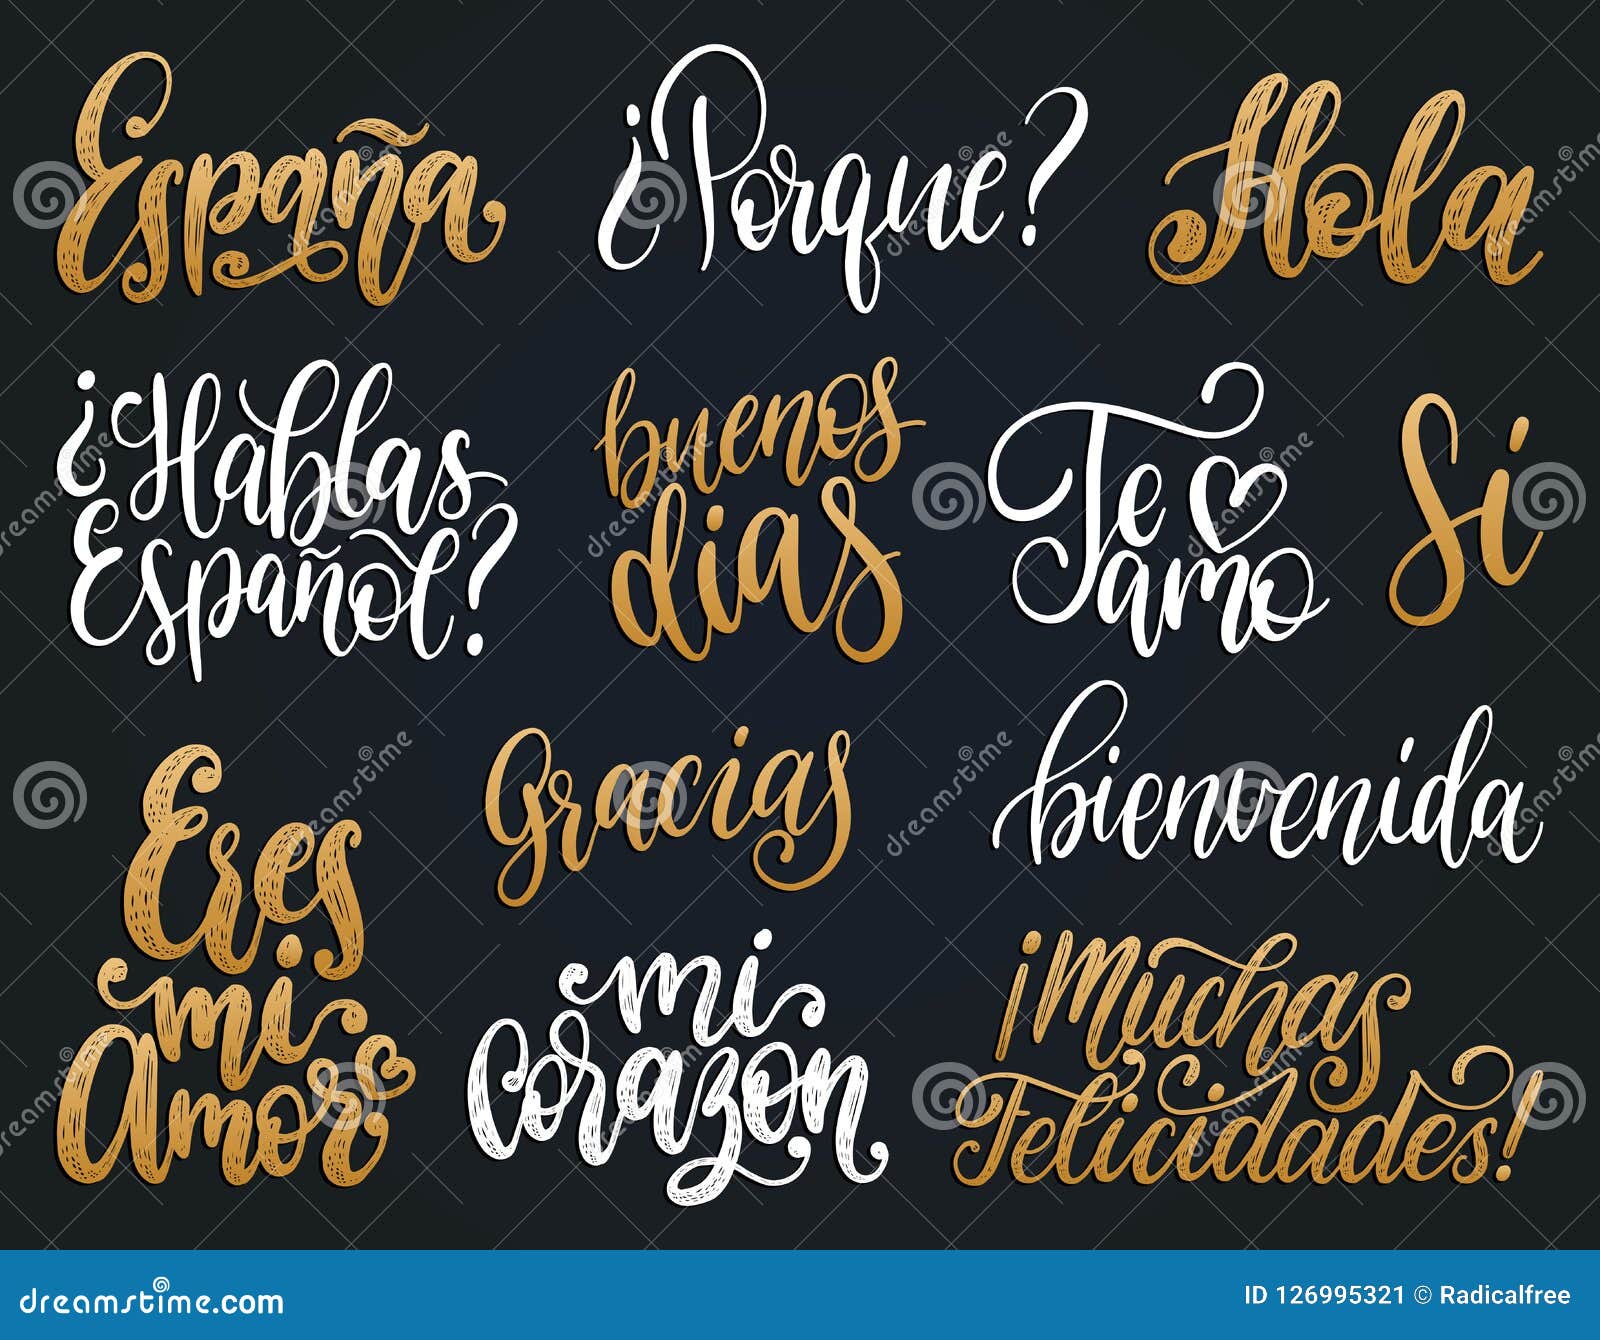 bienvenida, hola, feliz cumpleanos, gracias, espana translated from spanish handwritten phrases welcome, hello etc.